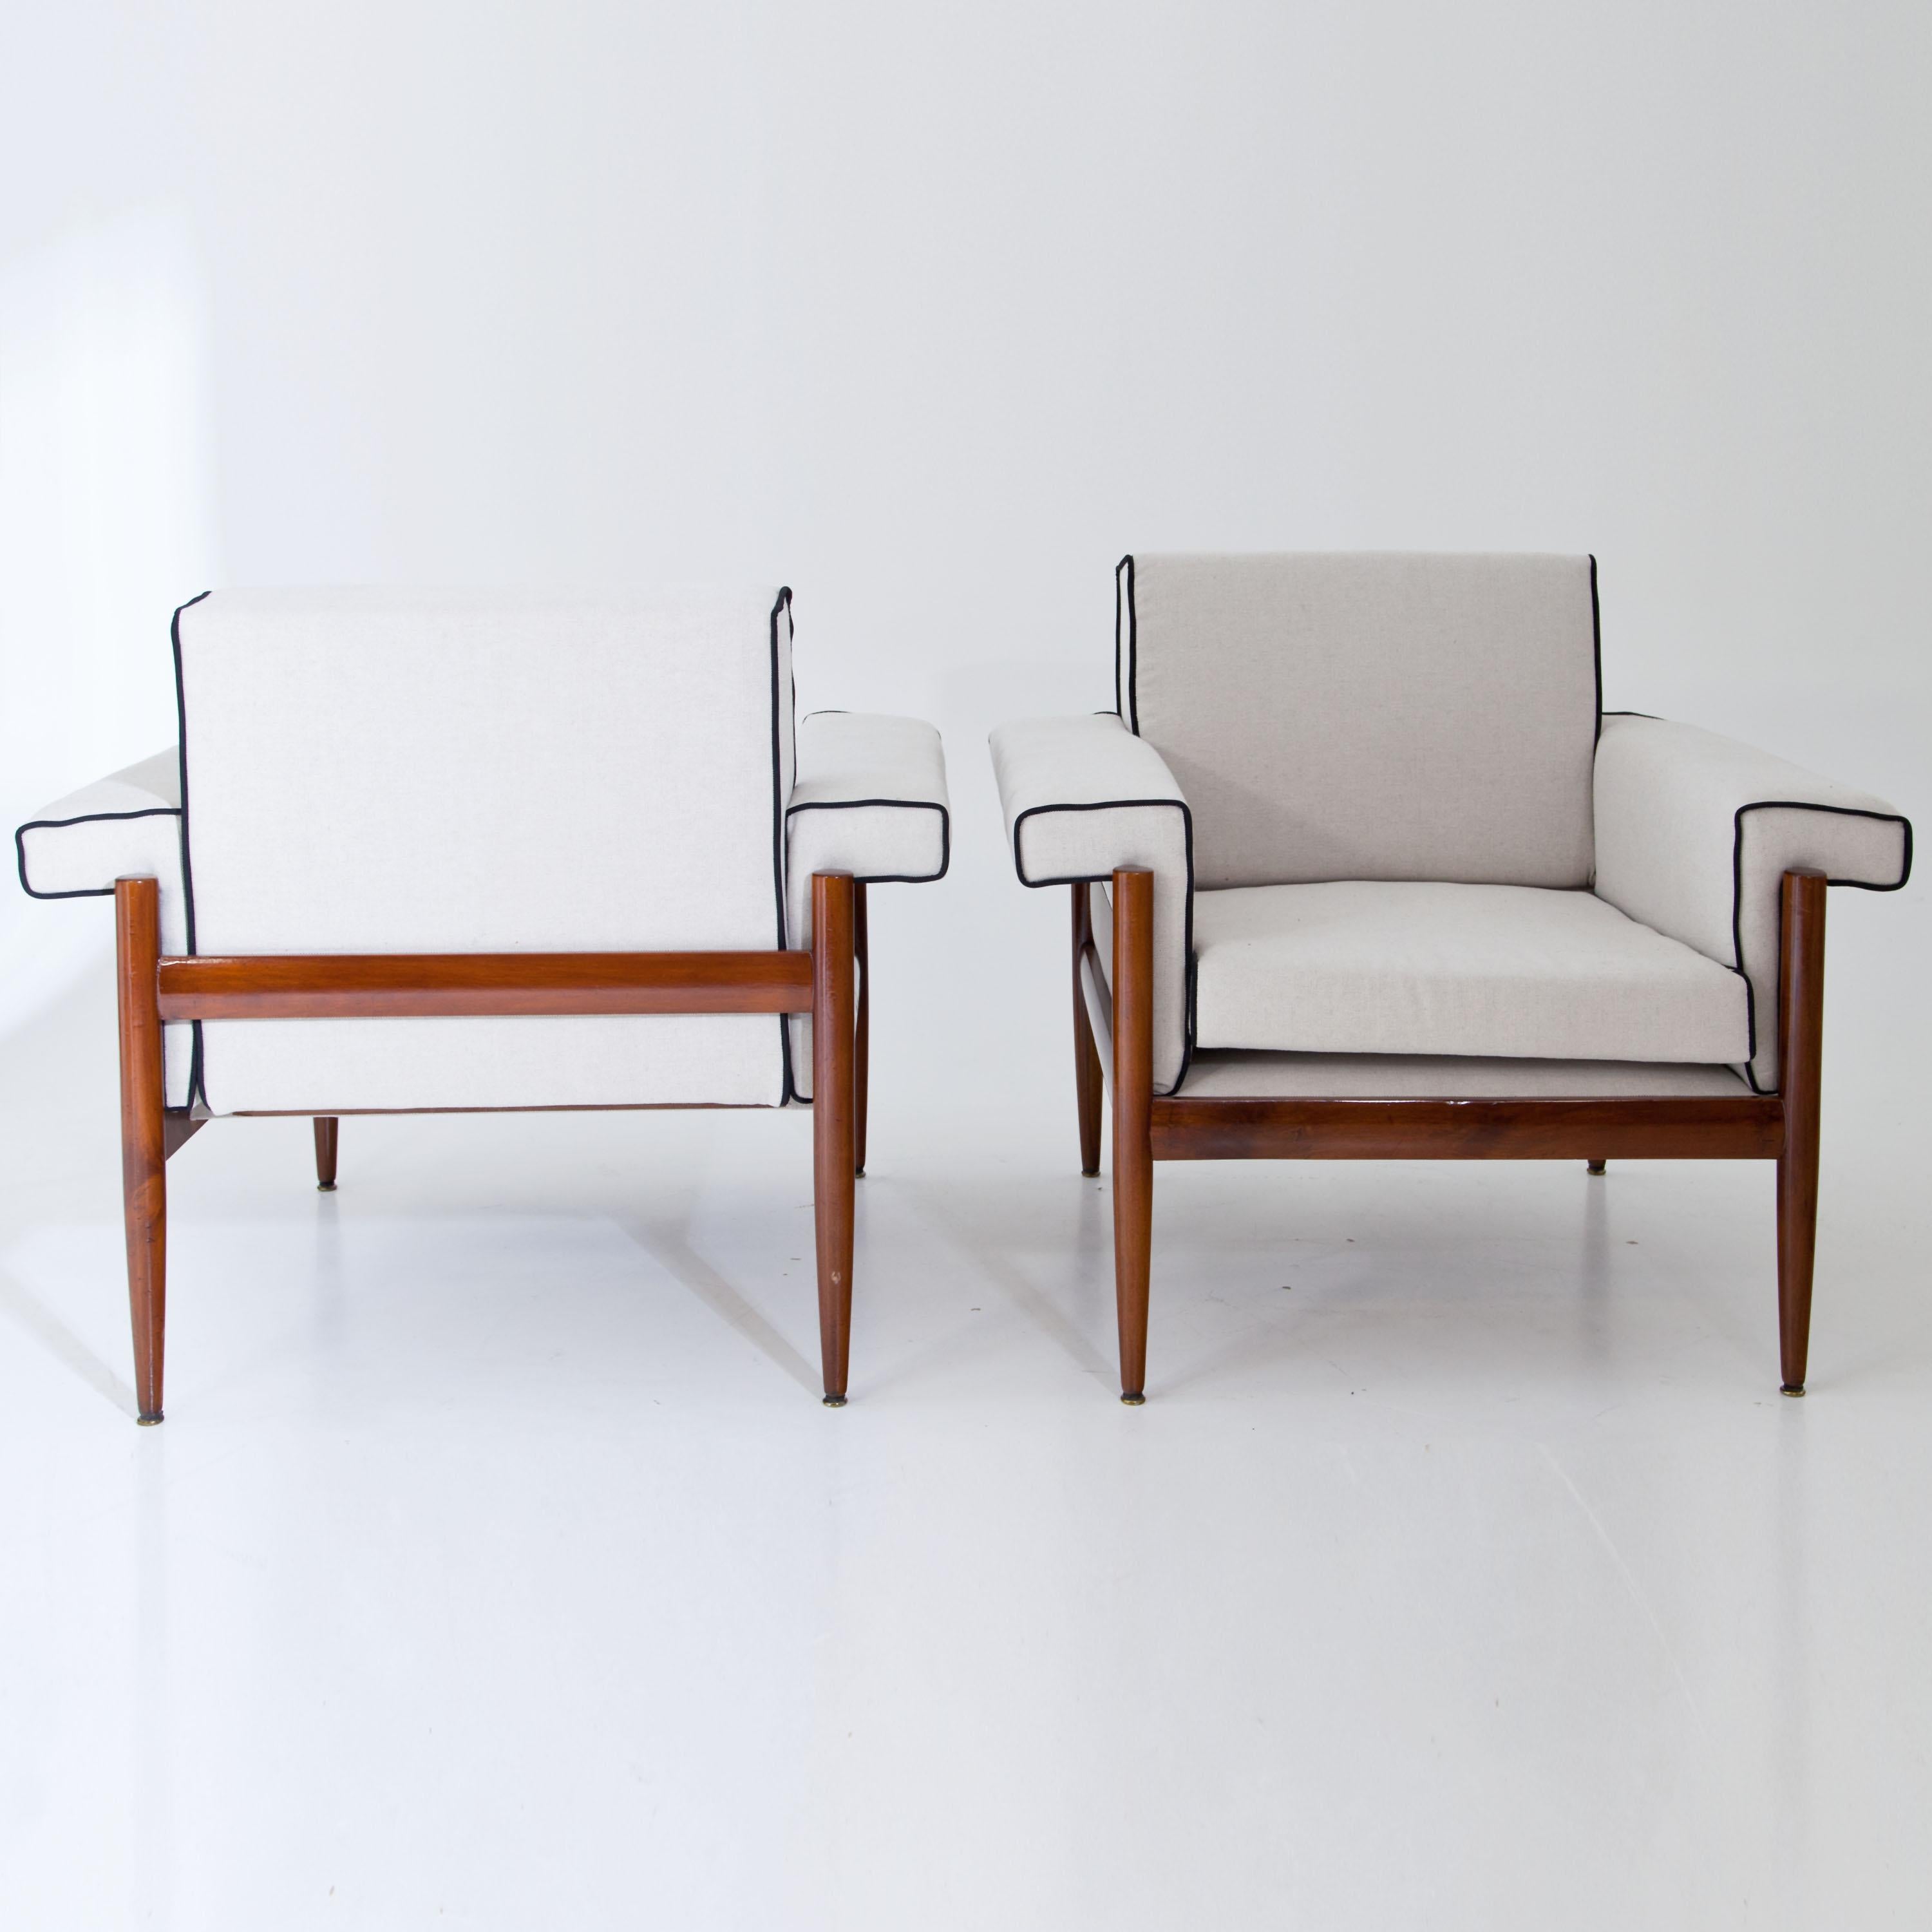 Pair of Italian Design Lounge Chairs, Trafilisa Isa Bergamo, Italy 1950s For Sale 2